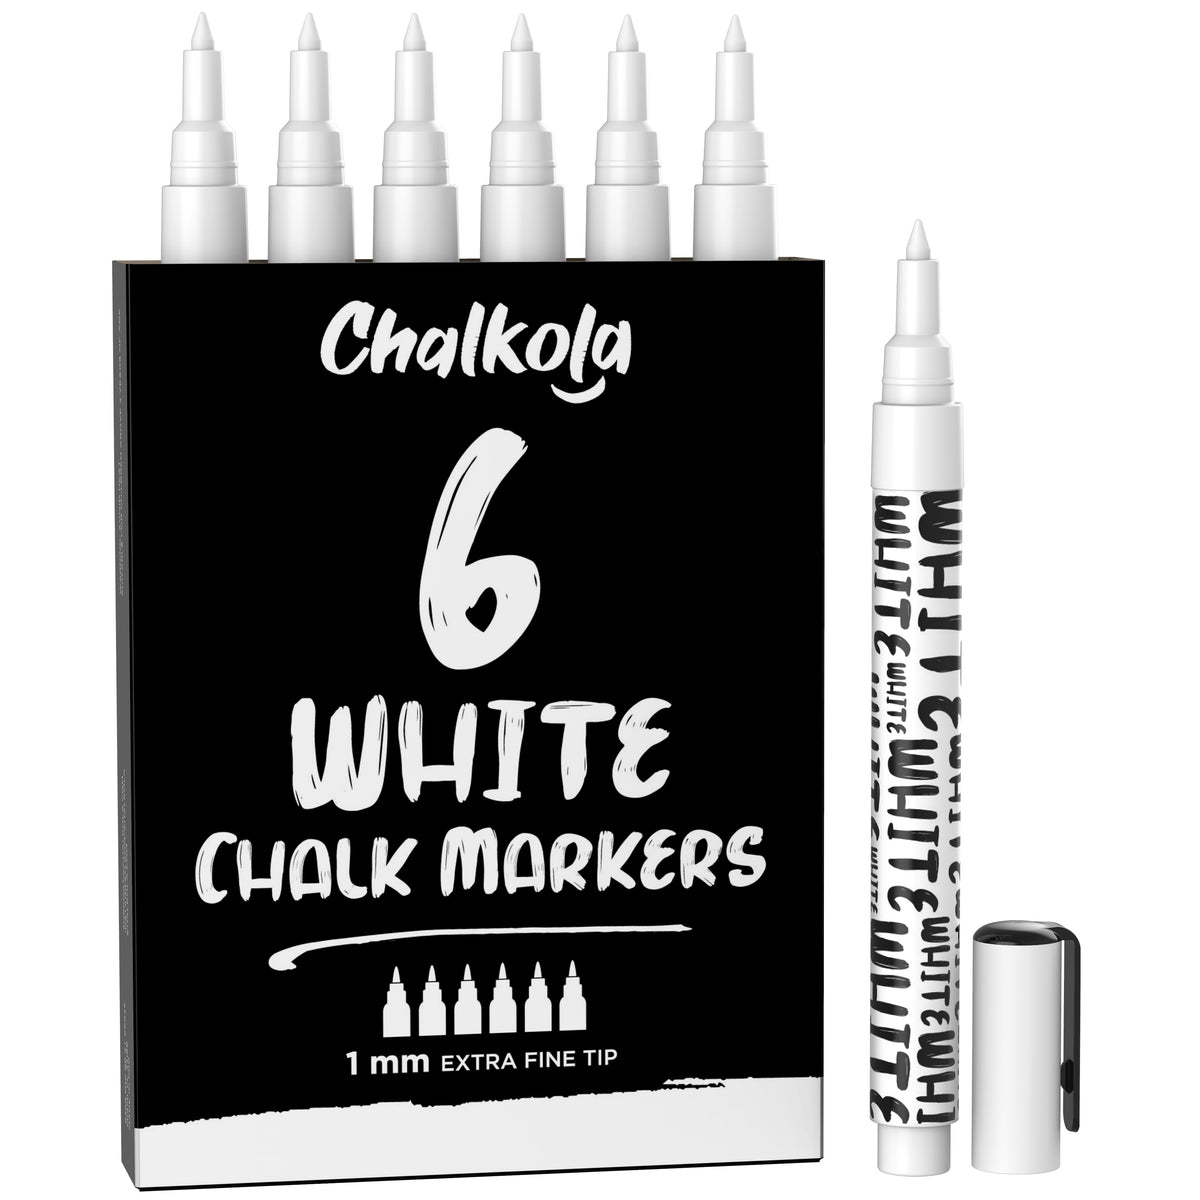 Mr. Pen- White Chalk Markers, 4 pcs, Assorted Size, Chalk Marker, Chalk  Pen, Liquid Chalk Marker 